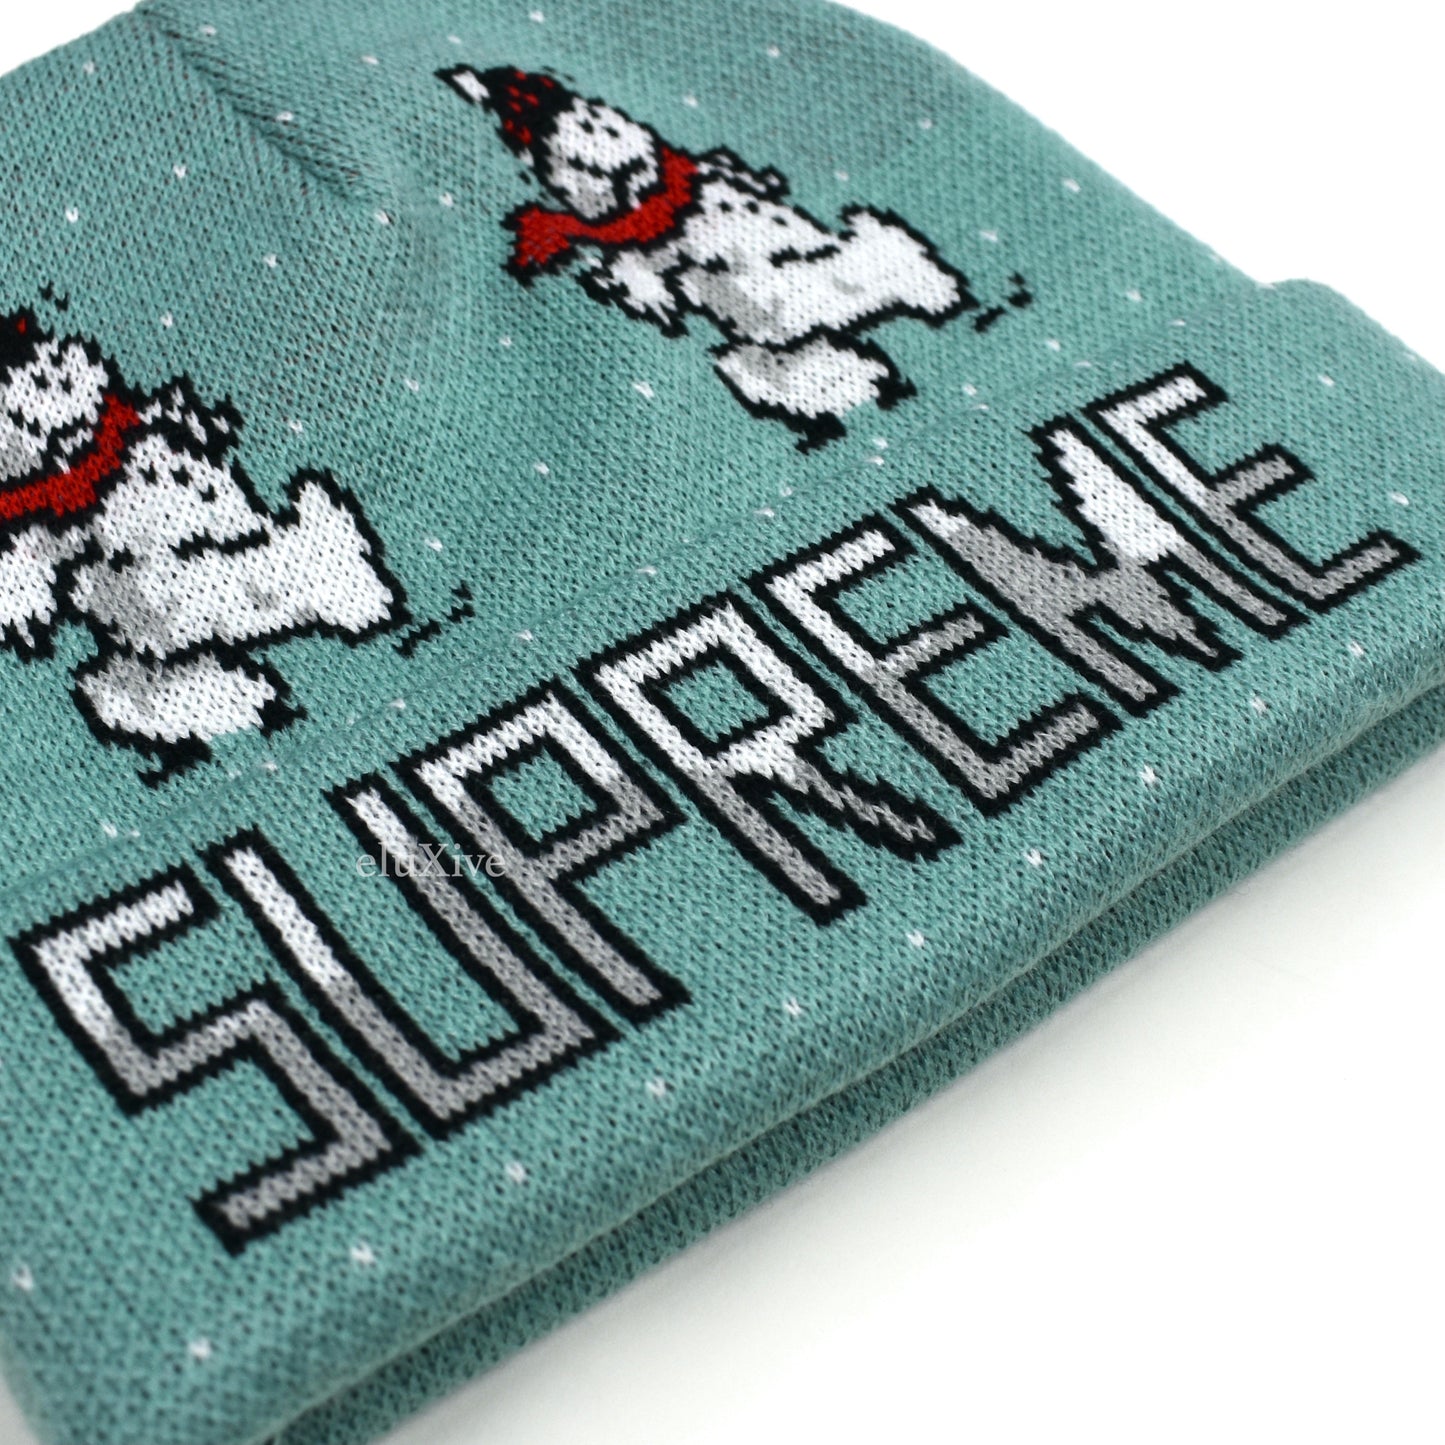 Supreme - Snowman Logo Knit Beanie (Mint Blue)